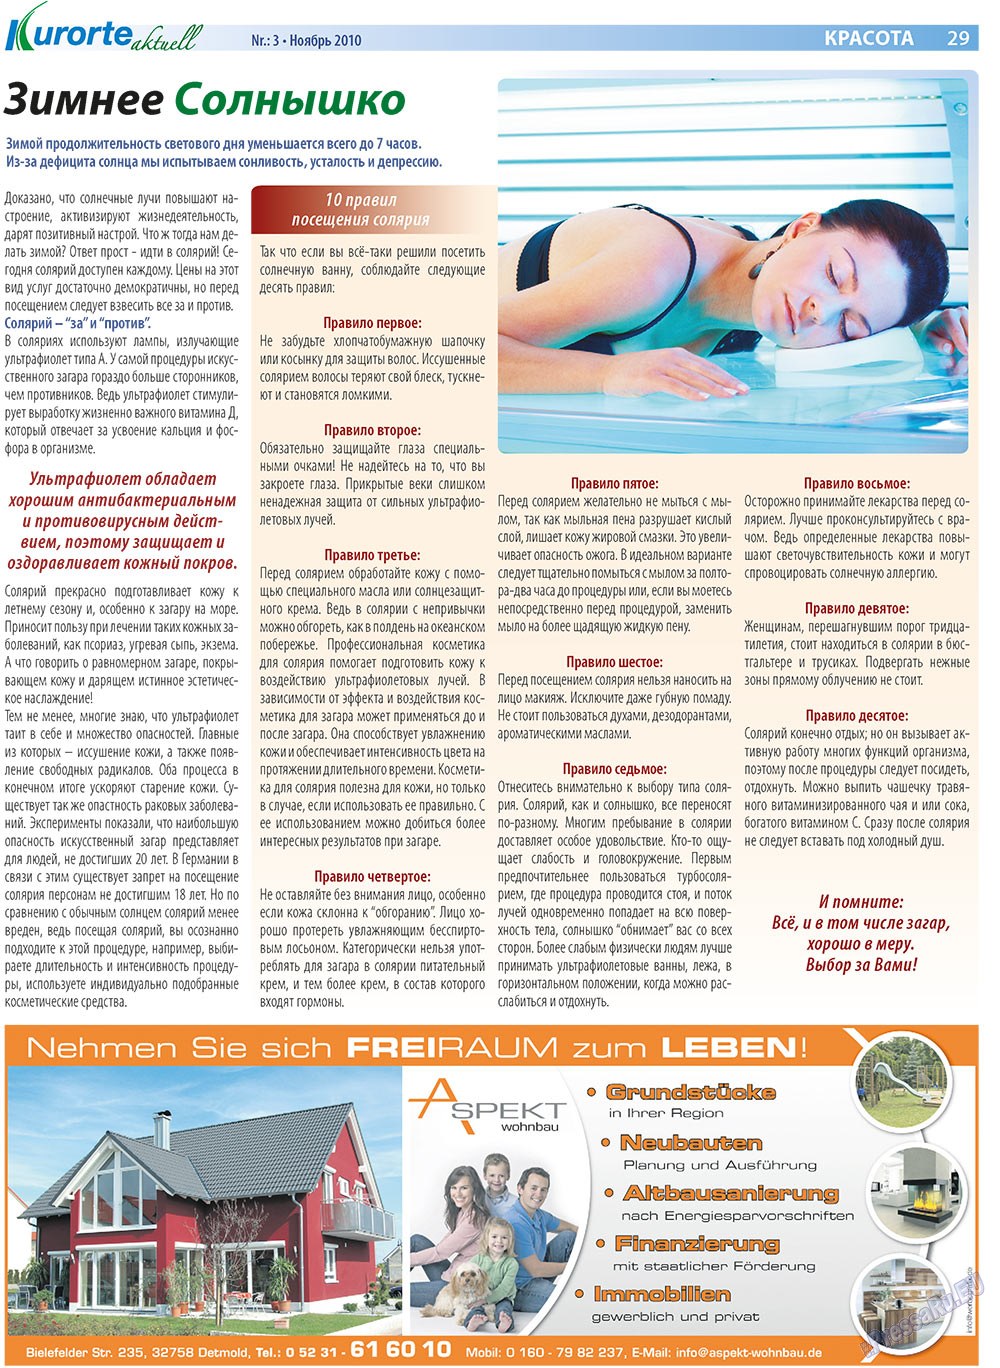 Kurorte aktuell (газета). 2010 год, номер 3, стр. 29